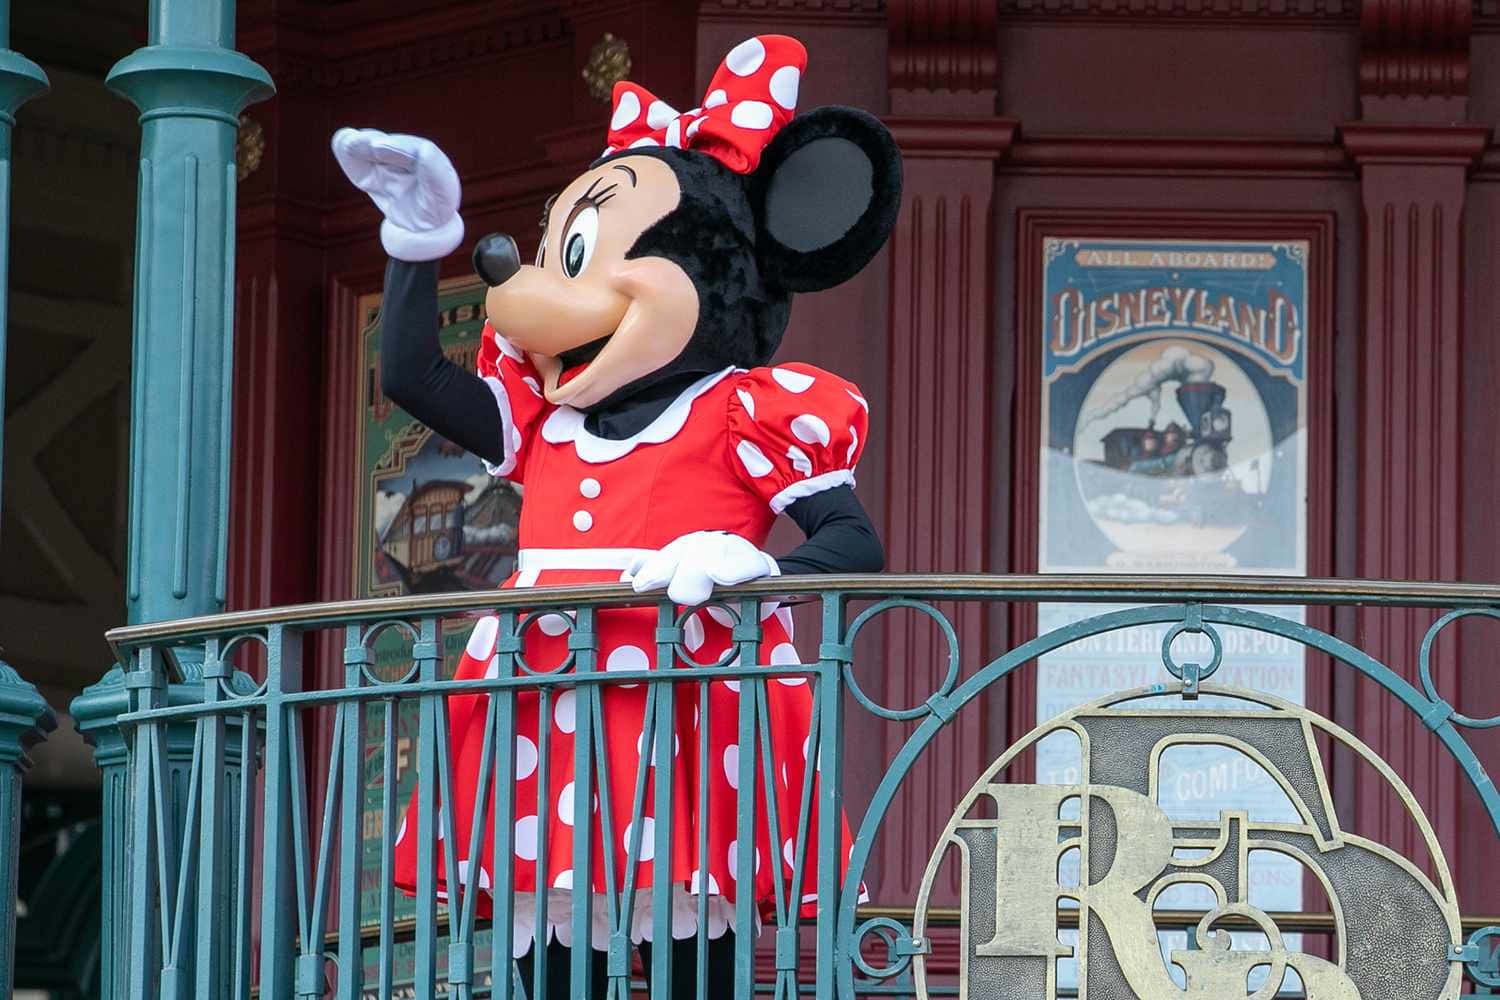 Minnie Mouse strikes a regal pose